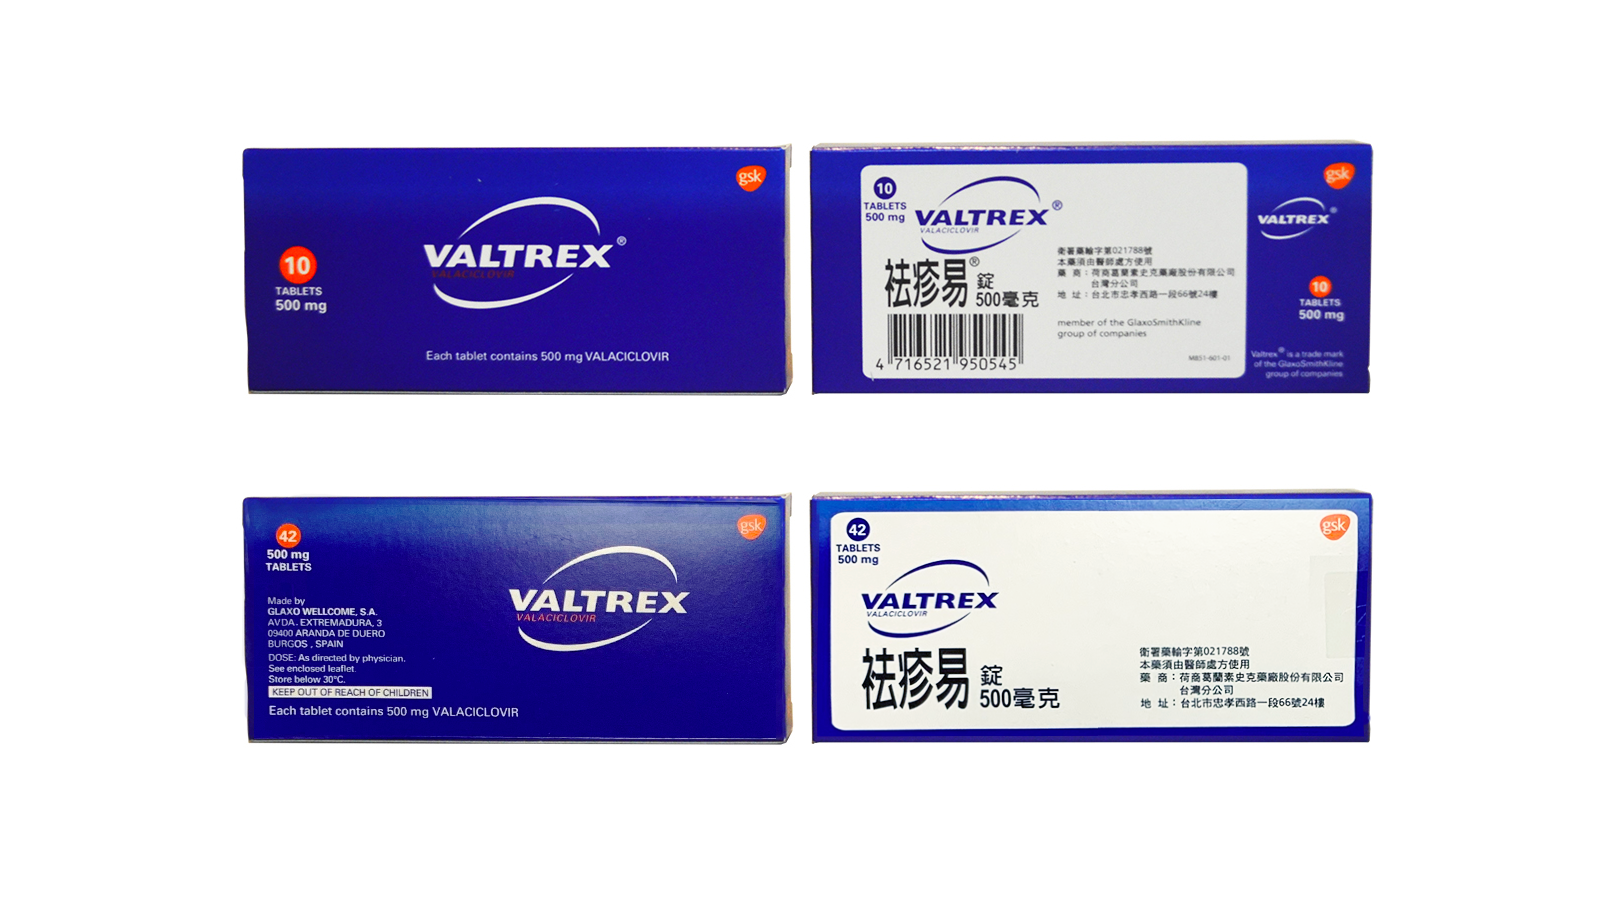 Valtrex 祛疹易產品照片